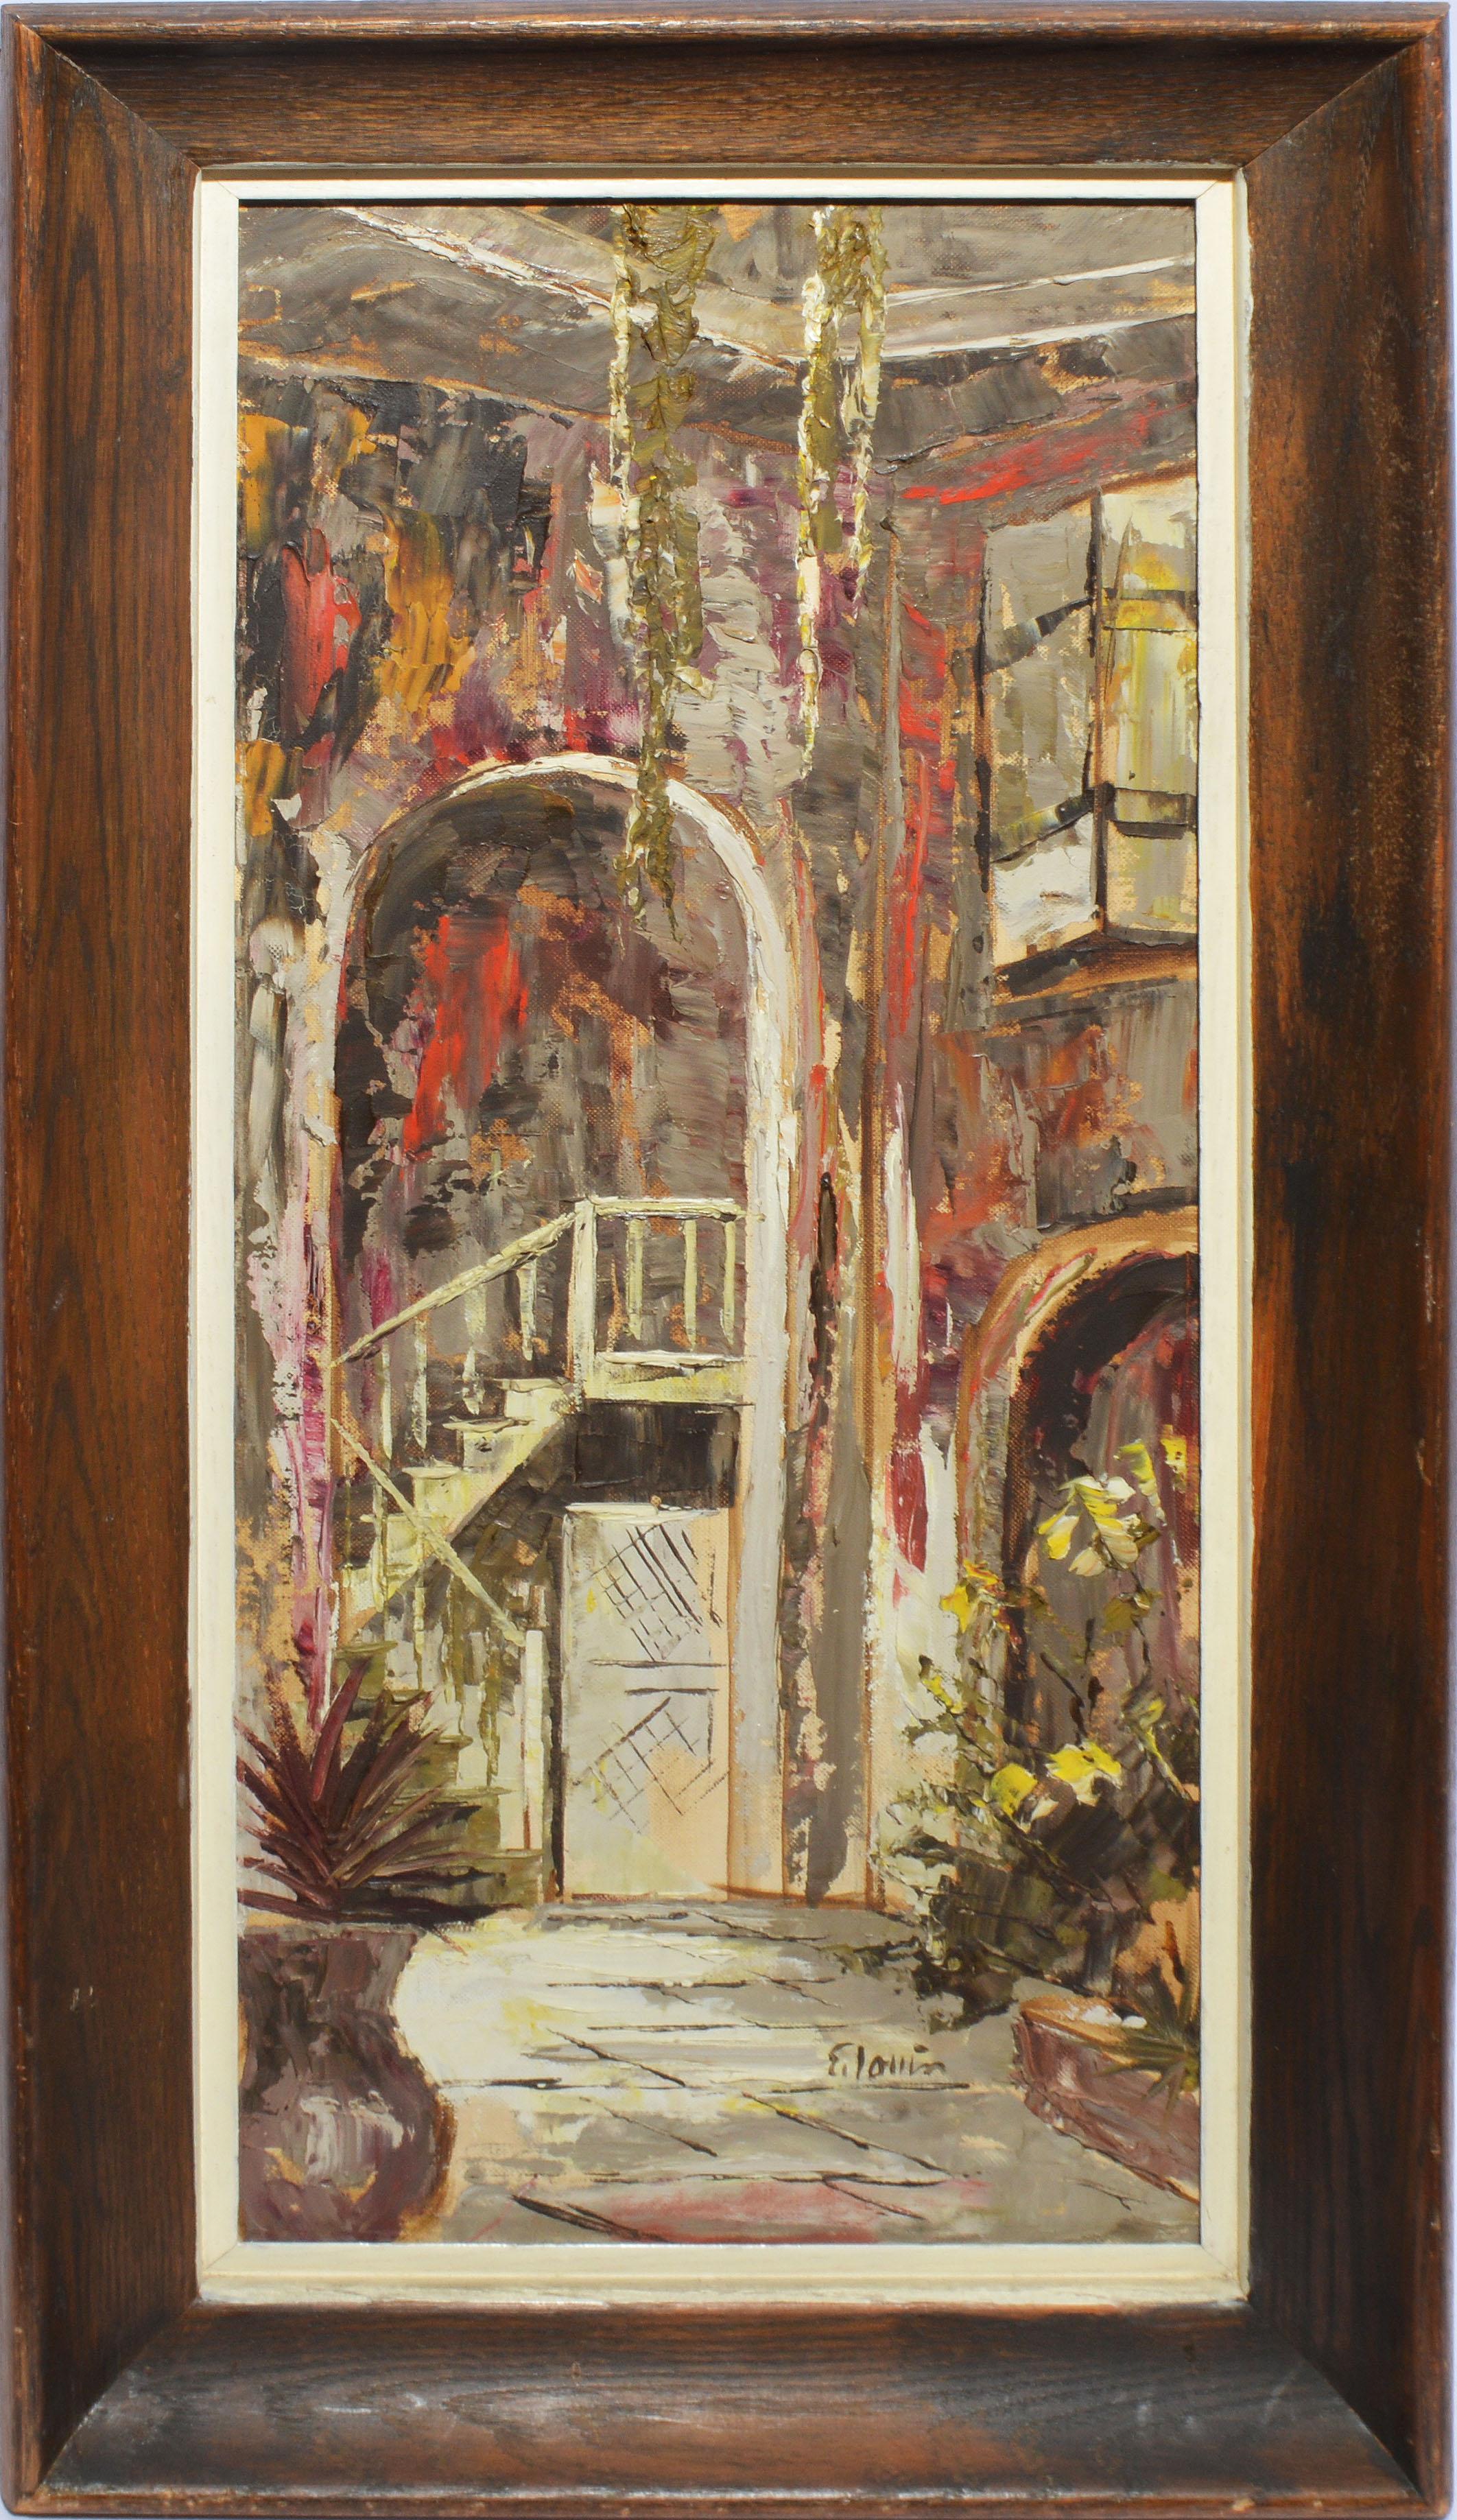 Edmund "Ed" Blouin Jr Landscape Painting - Vintage Impressionist Oil Painting of a New Orleans Courtyard  by Ed Blouin Jr